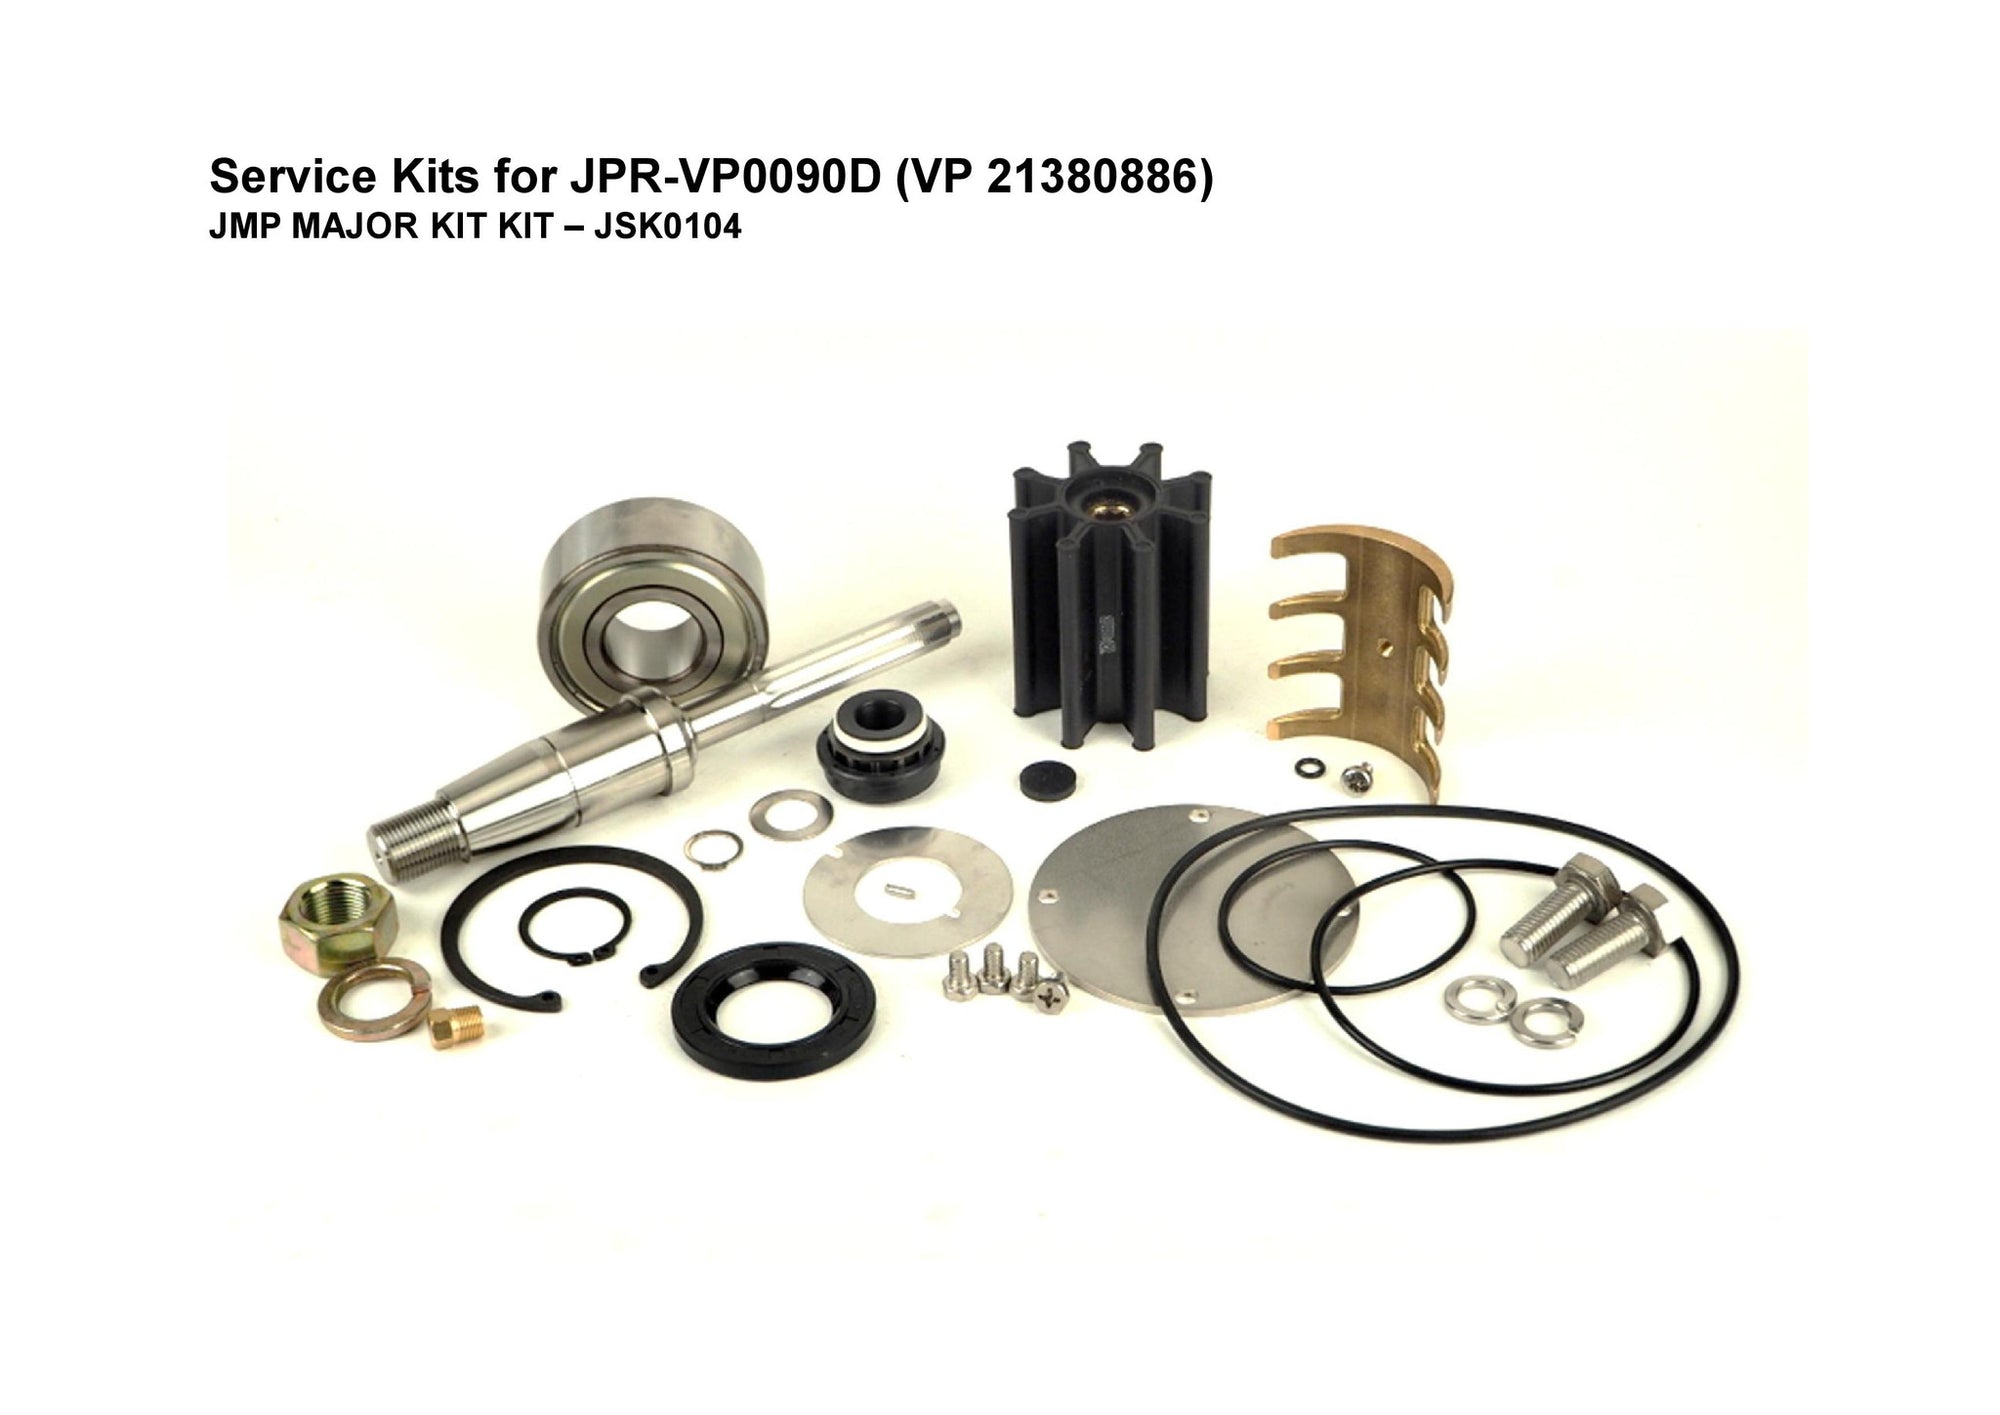 JMP-JSK0104 MAJOR KIT FOR JMP PUMP JPR-VP0090D-21380886